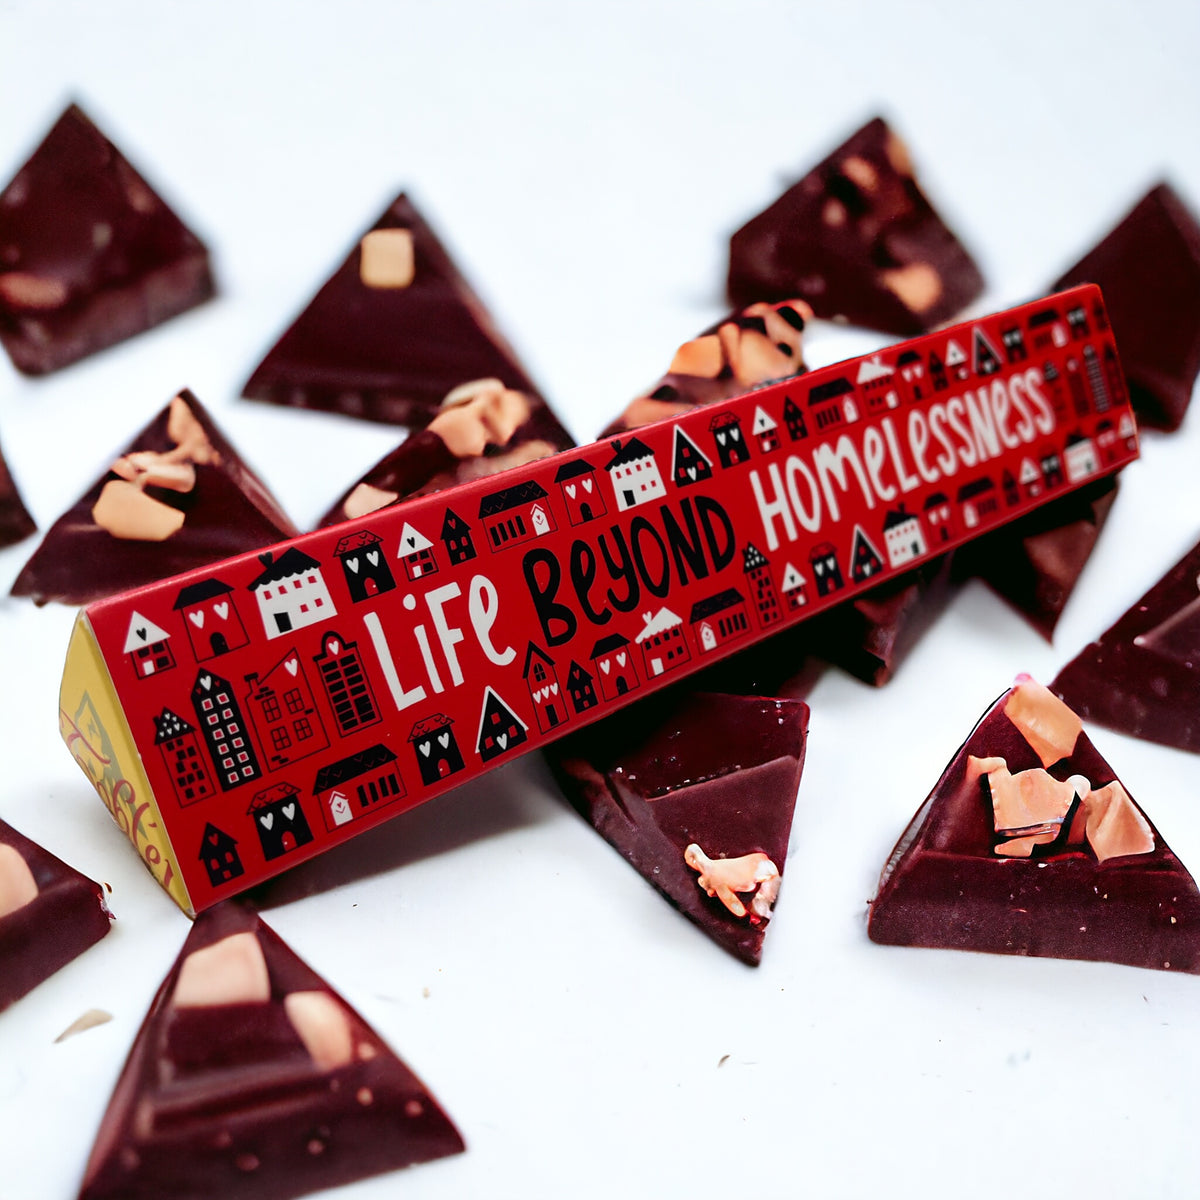 Crisis Toblerone Chocolate Bar - Exclusive "Life beyond homelessness" Design